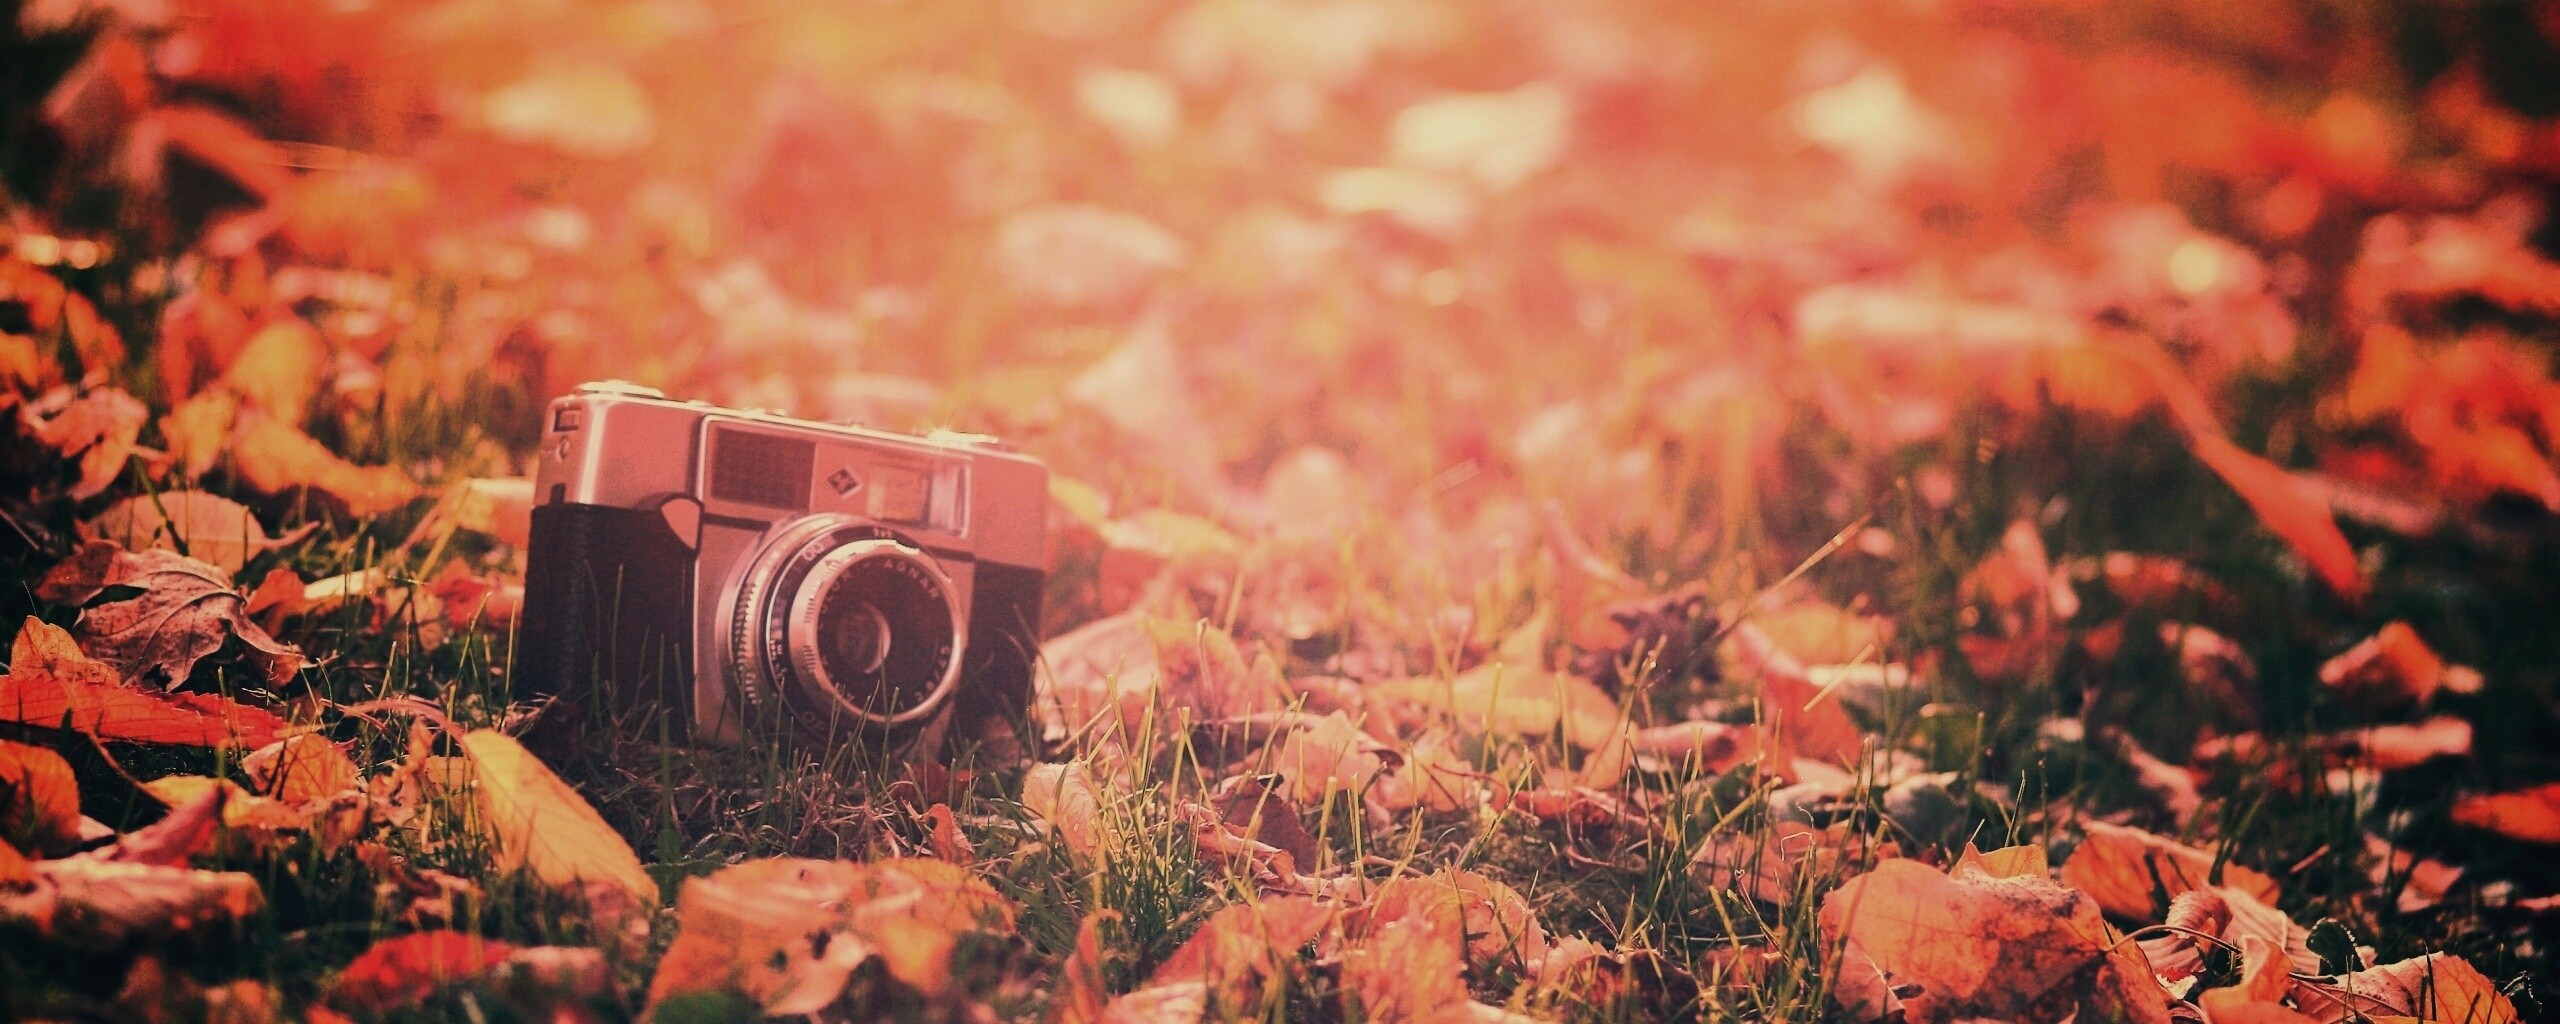 Фотоаппарат в траве без смс